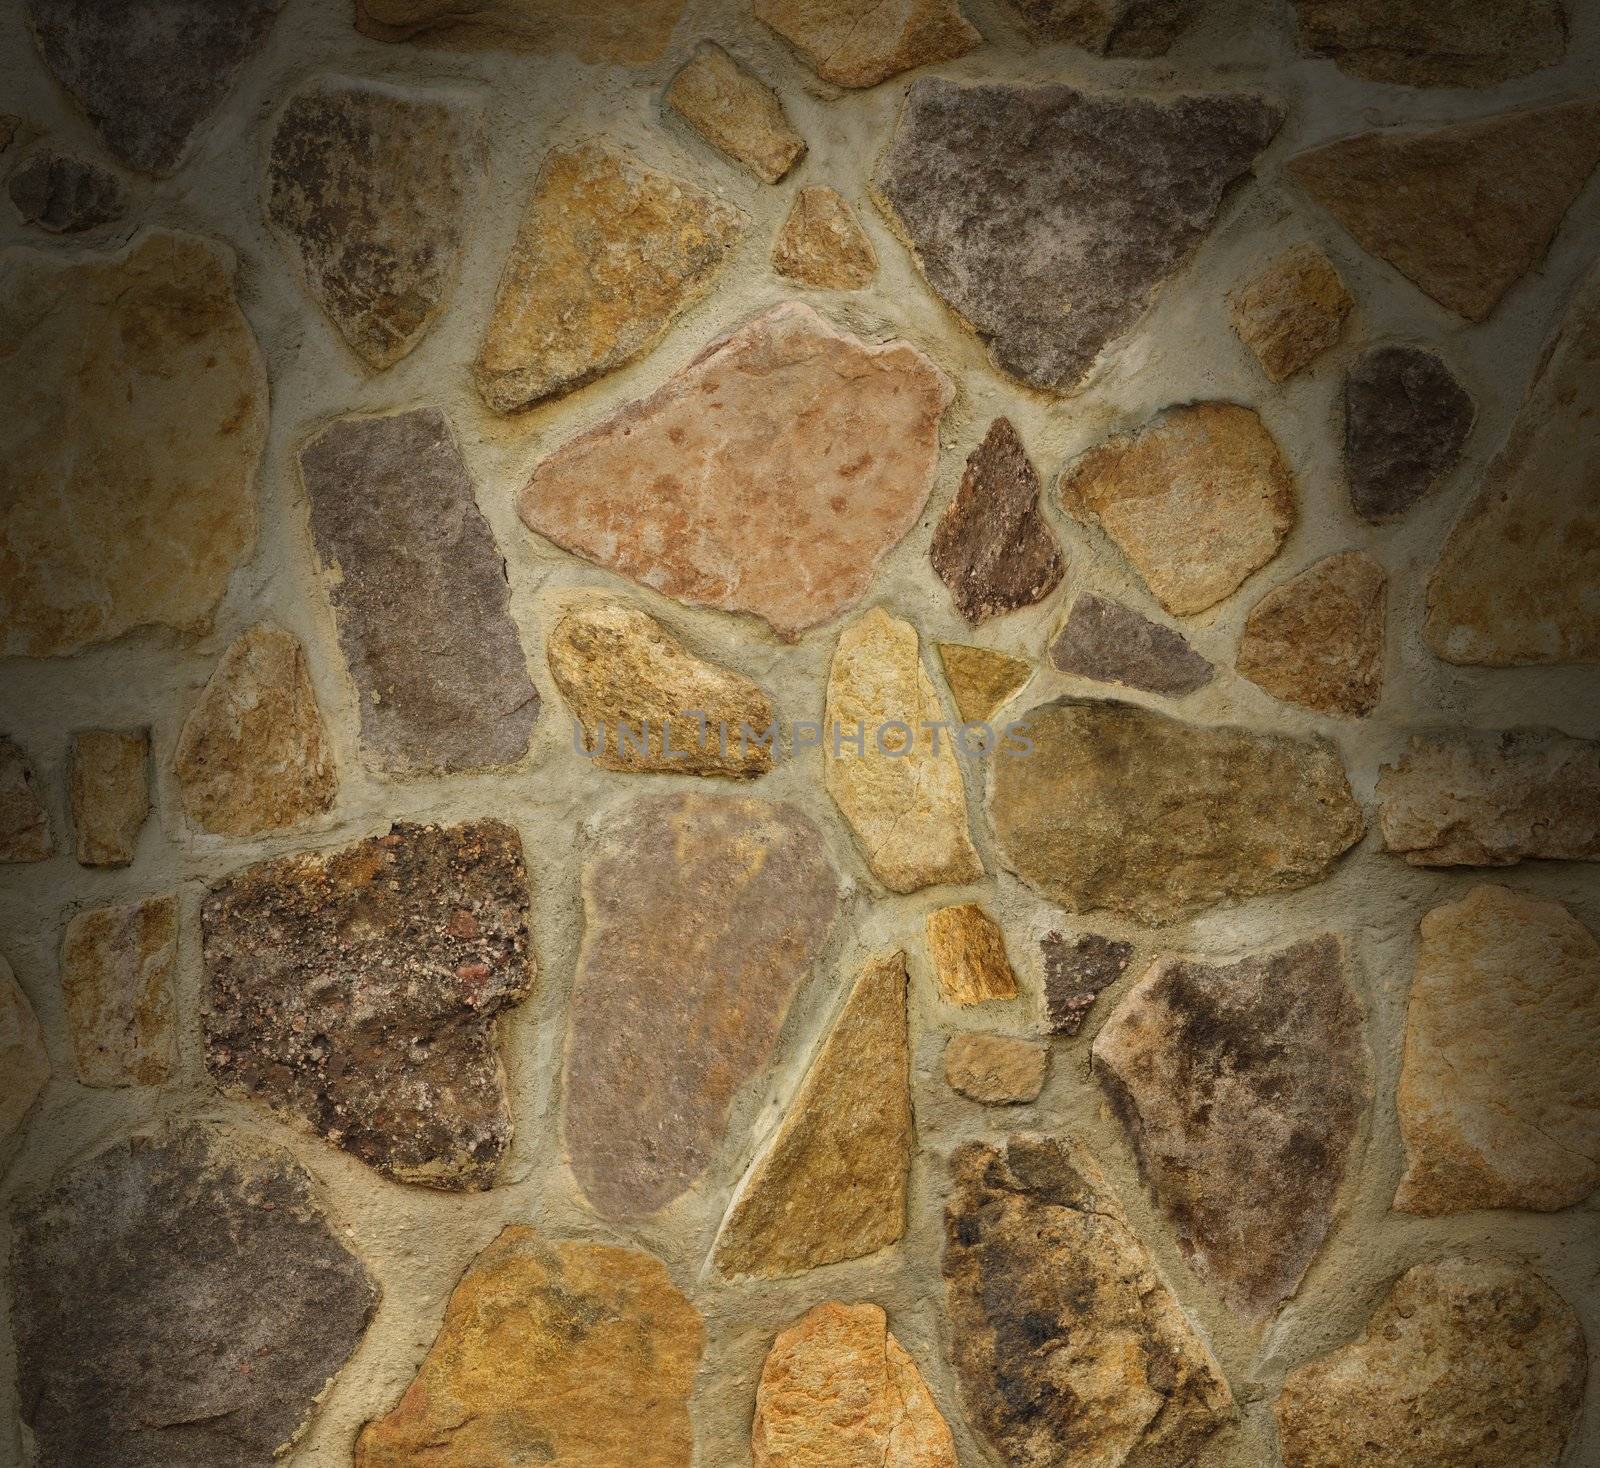 Masonry wall with irregular shaped stones dramatically lit from above